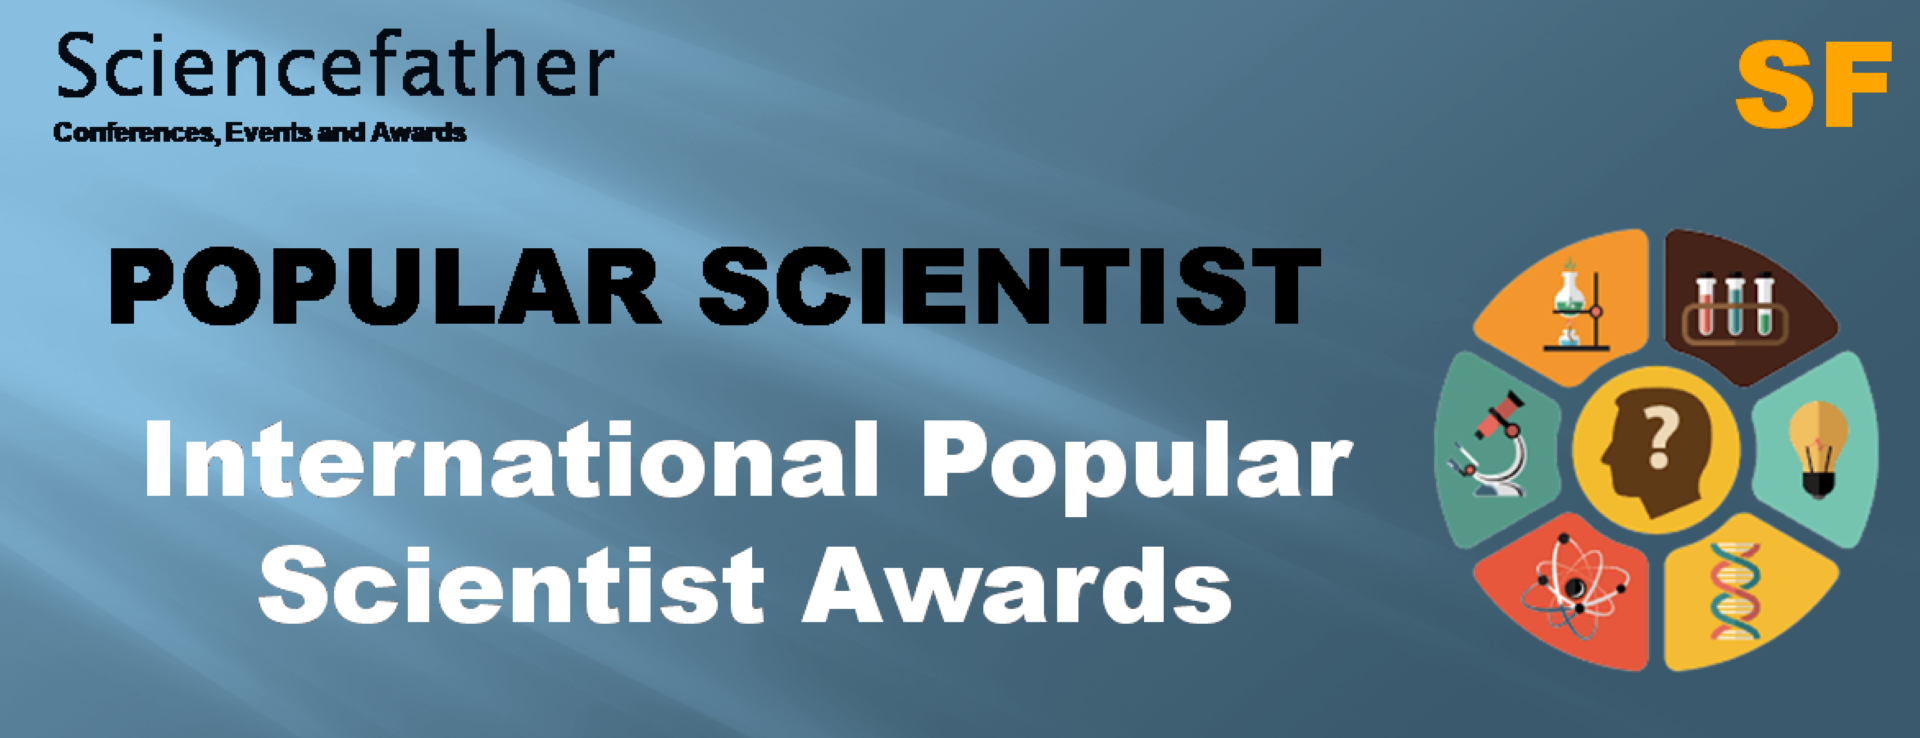 11th Edition of International Popular Scientist Awards, Online Event